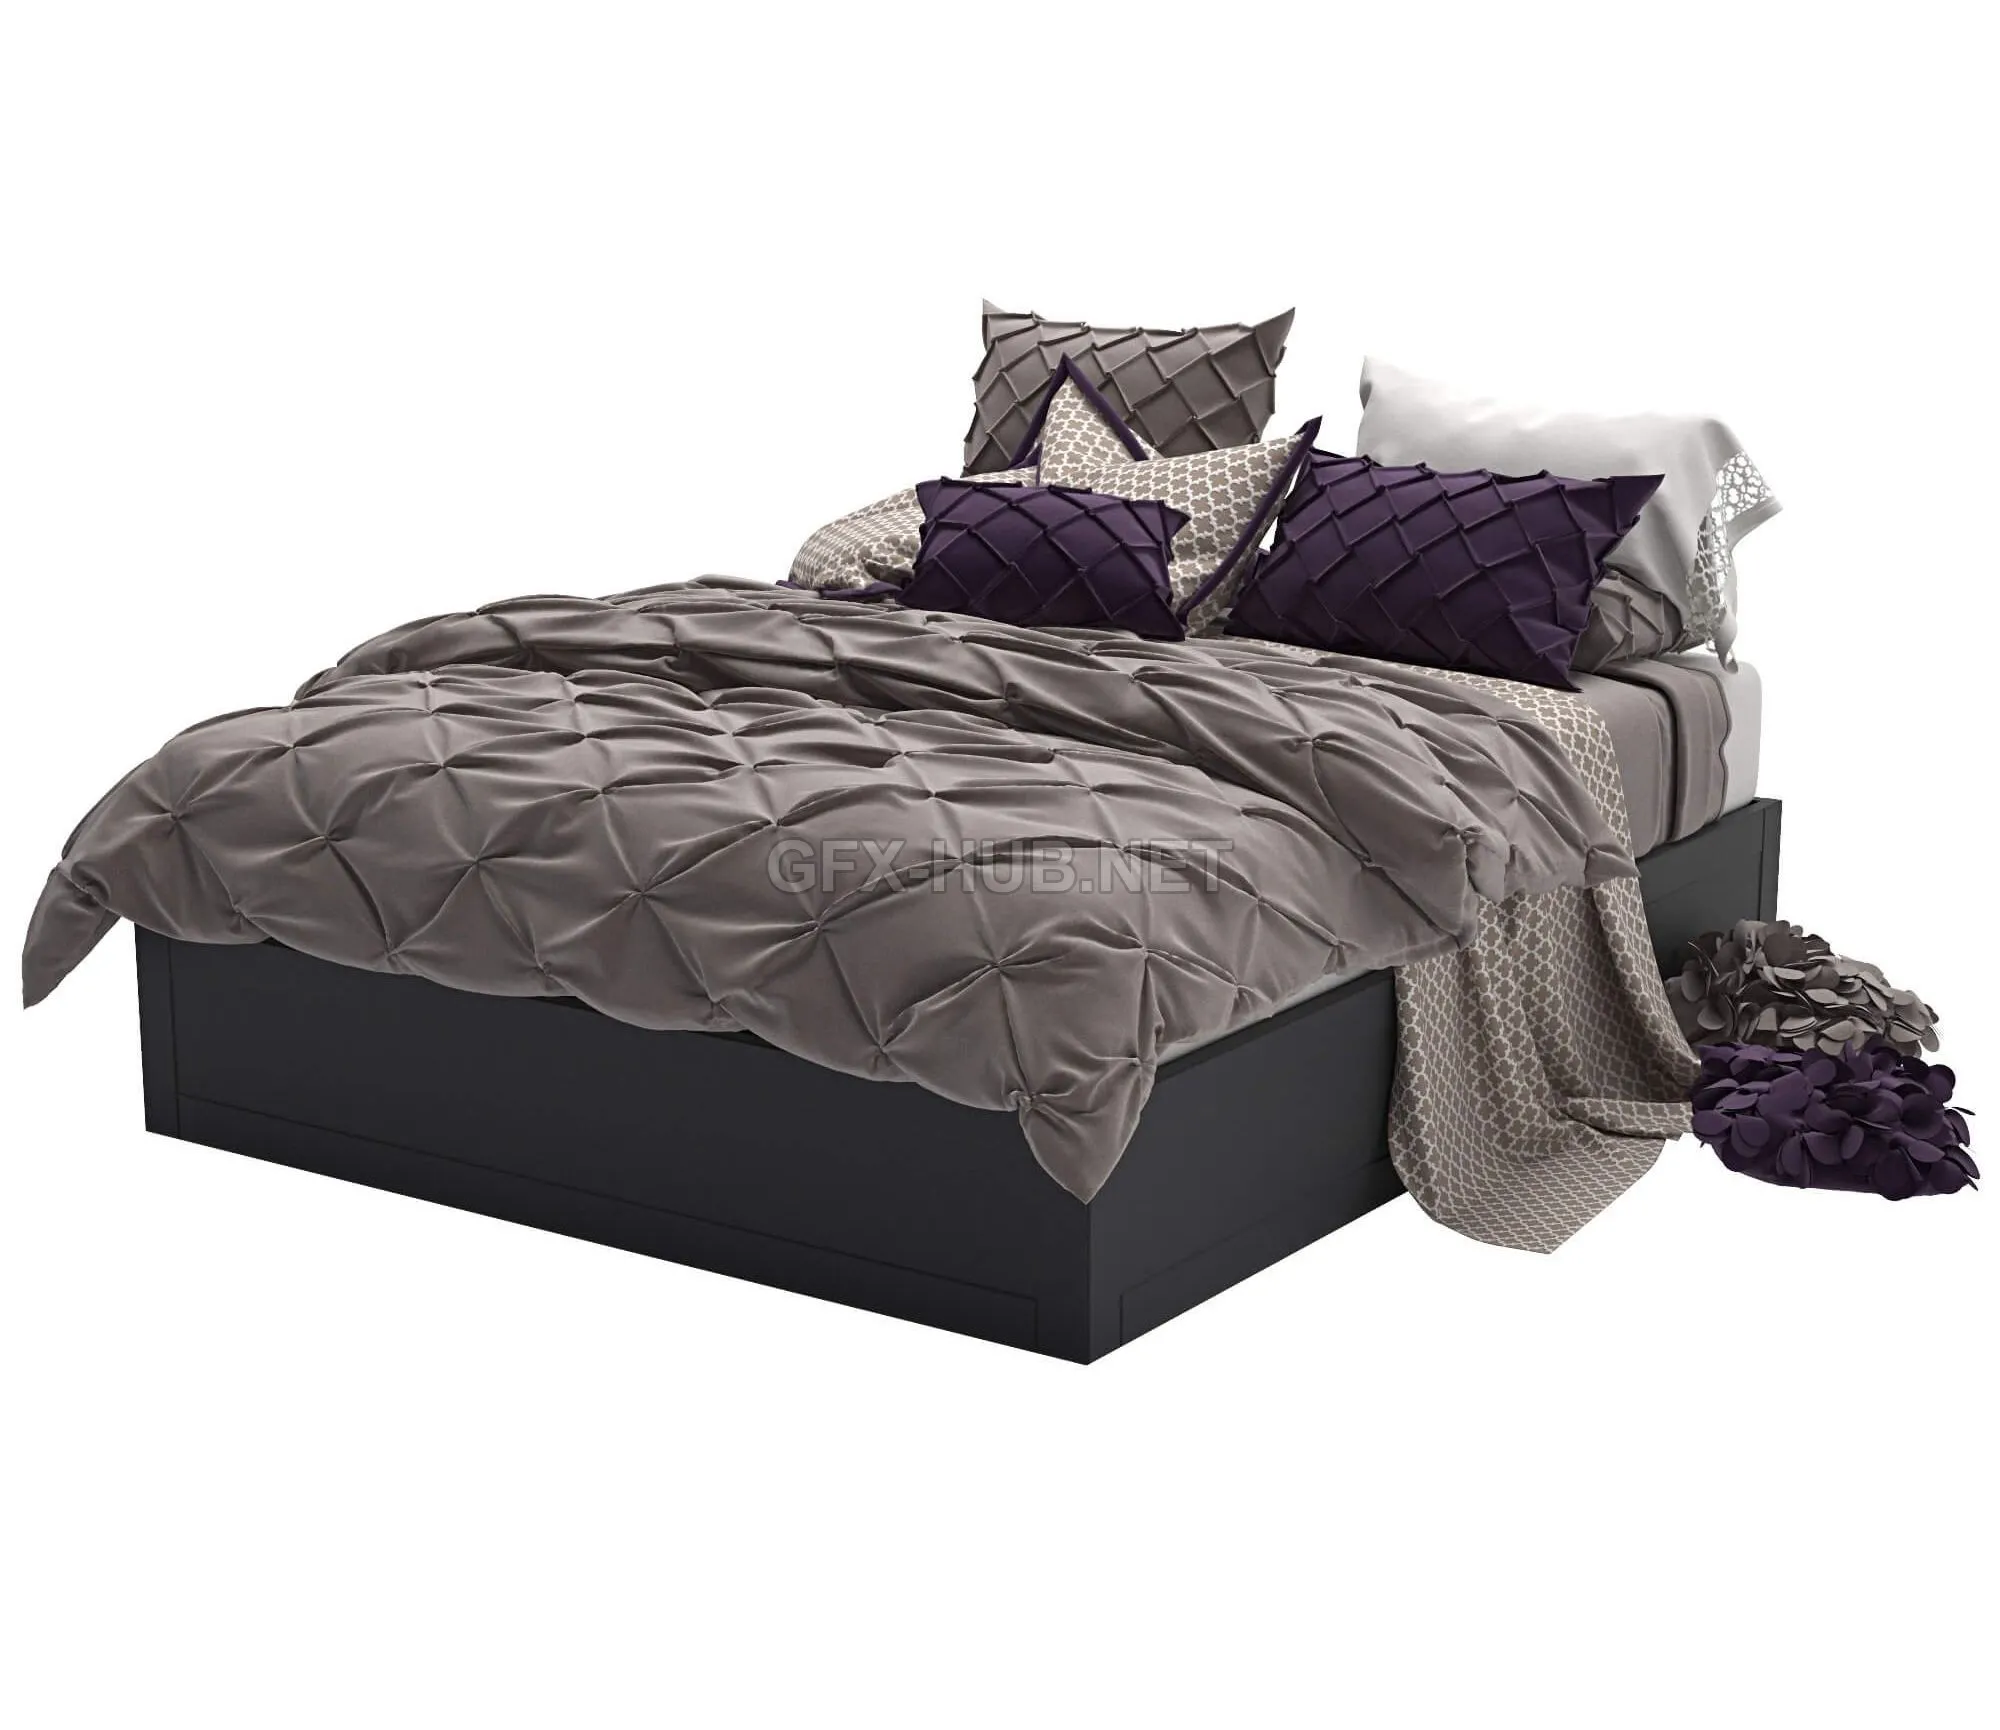 Bedclothes 17 – 207865